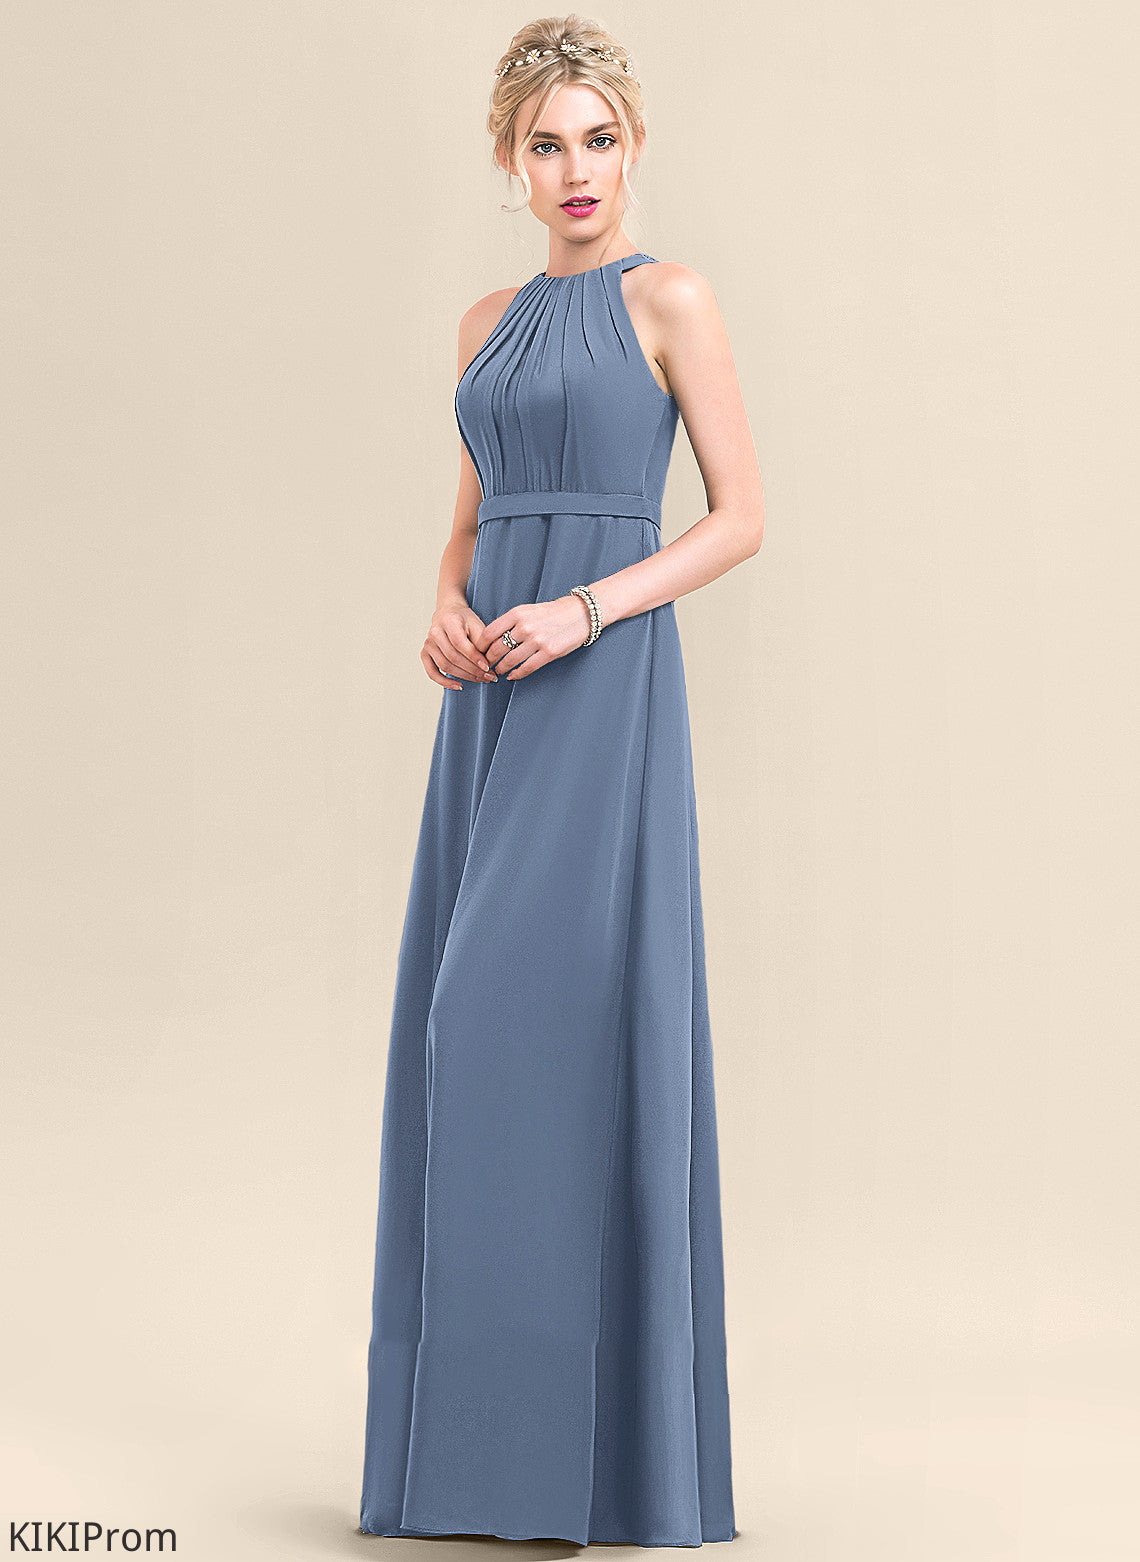 Length ScoopNeck A-Line Silhouette Neckline Fabric Floor-Length Embellishment Ruffle Lailah Floor Length V-Neck Bridesmaid Dresses